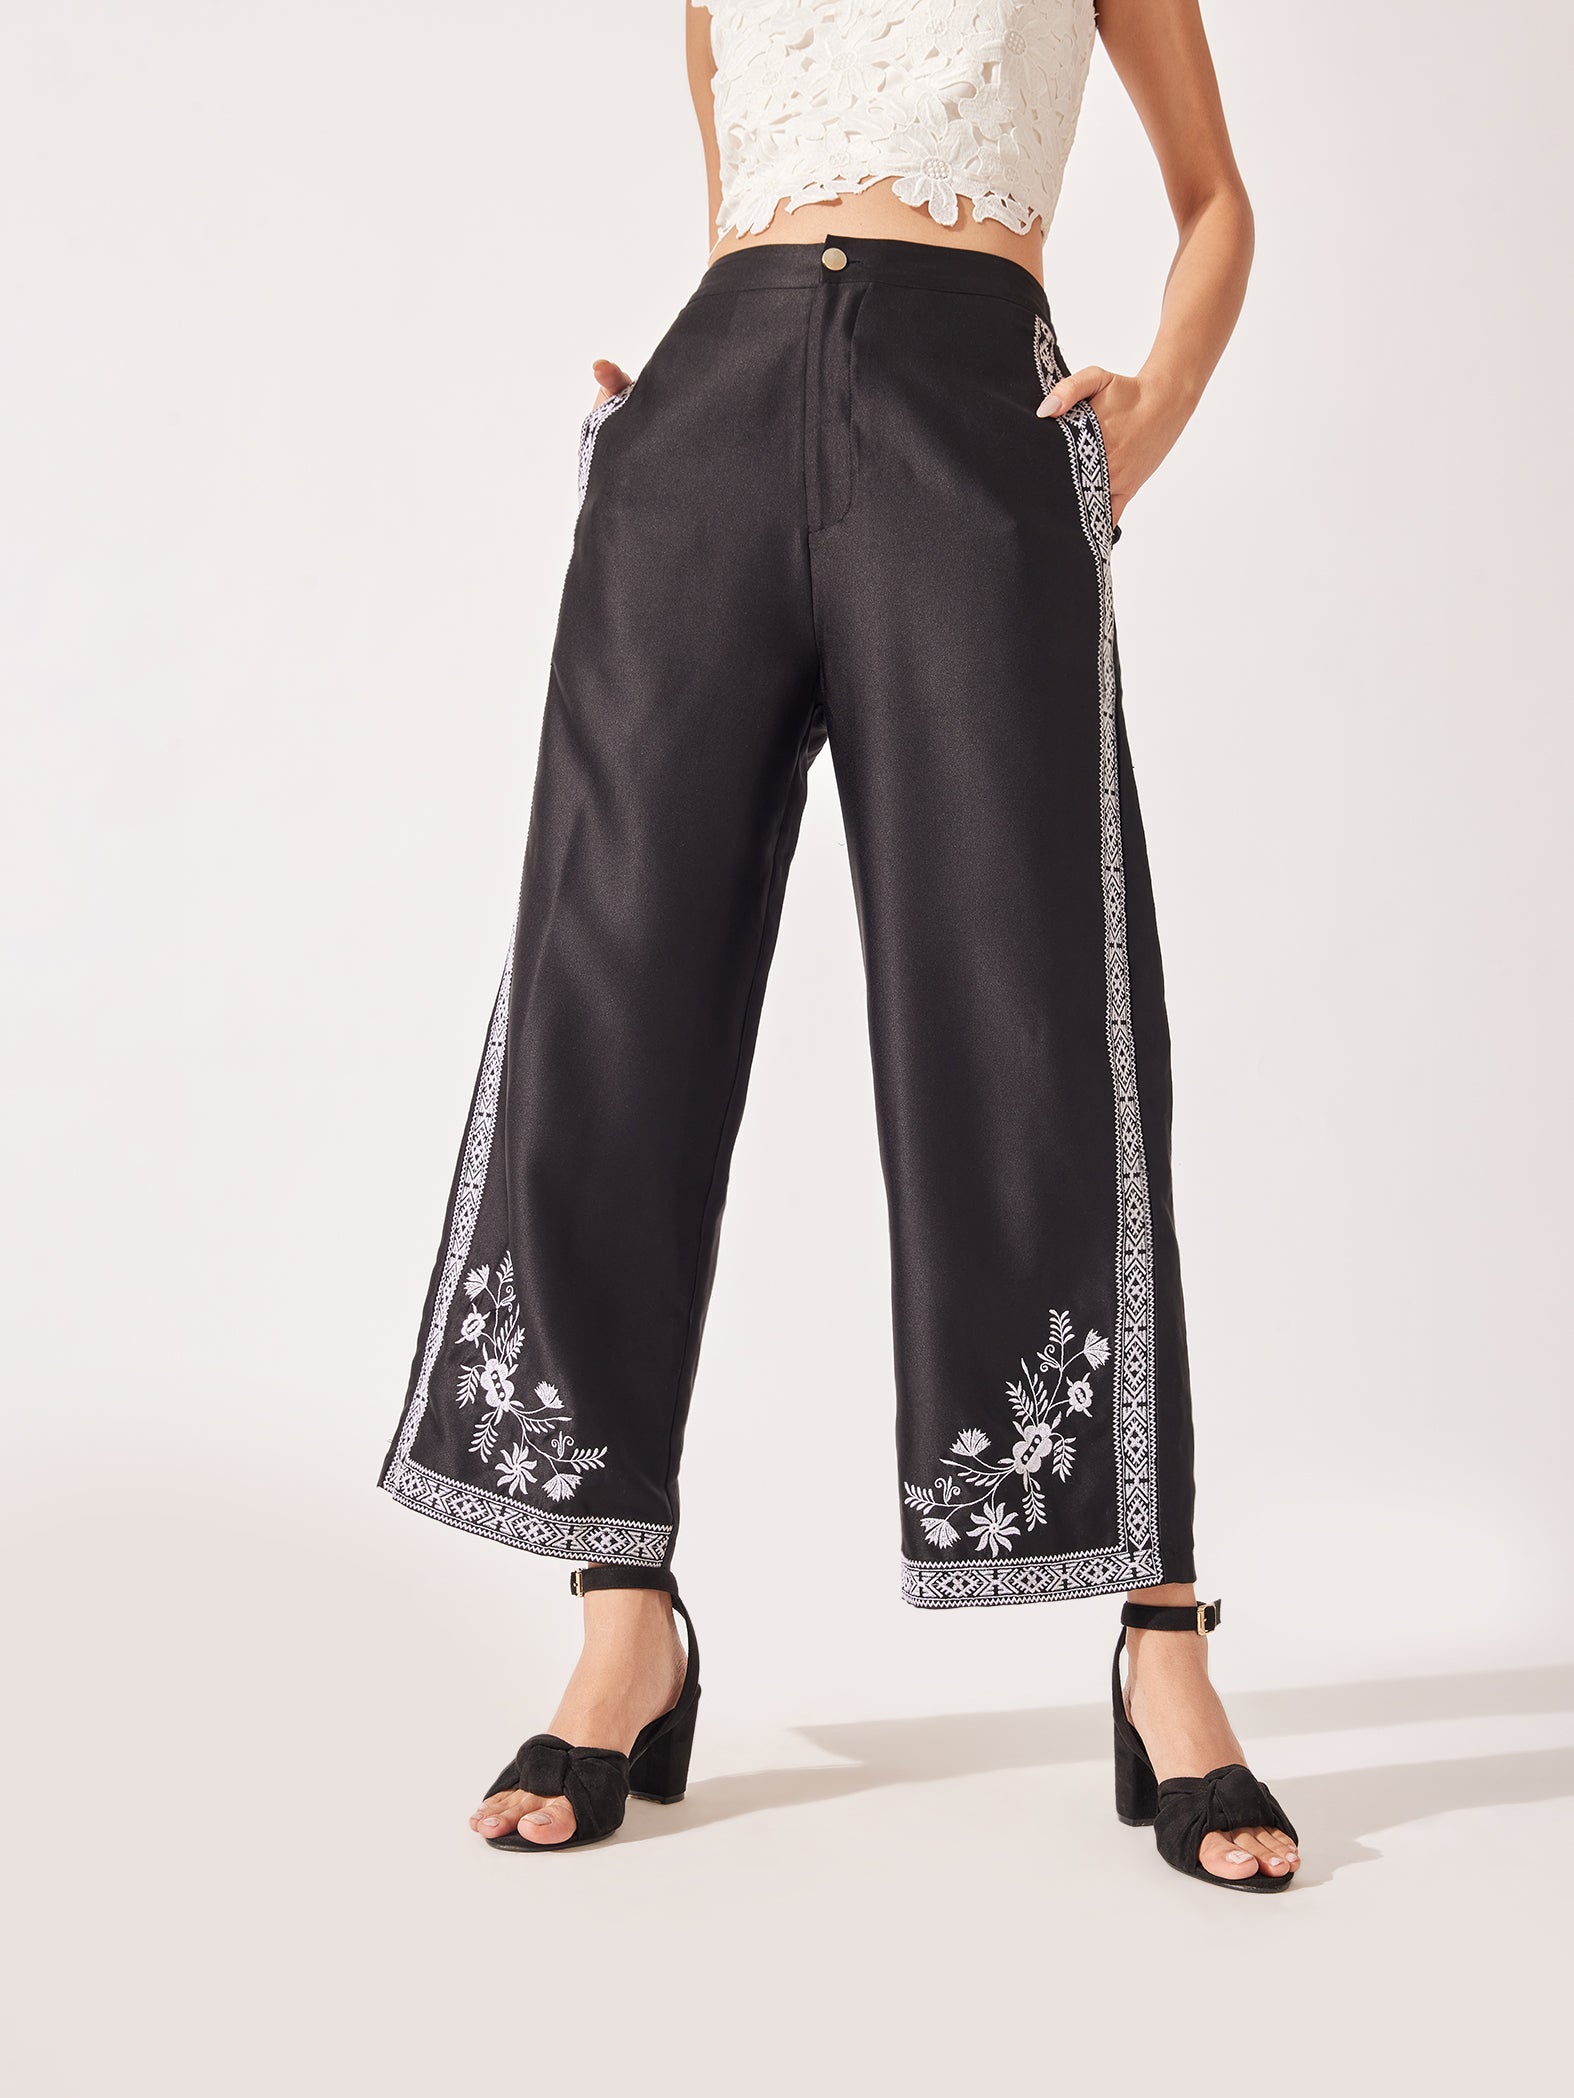 Black Floral Embroidered Pants